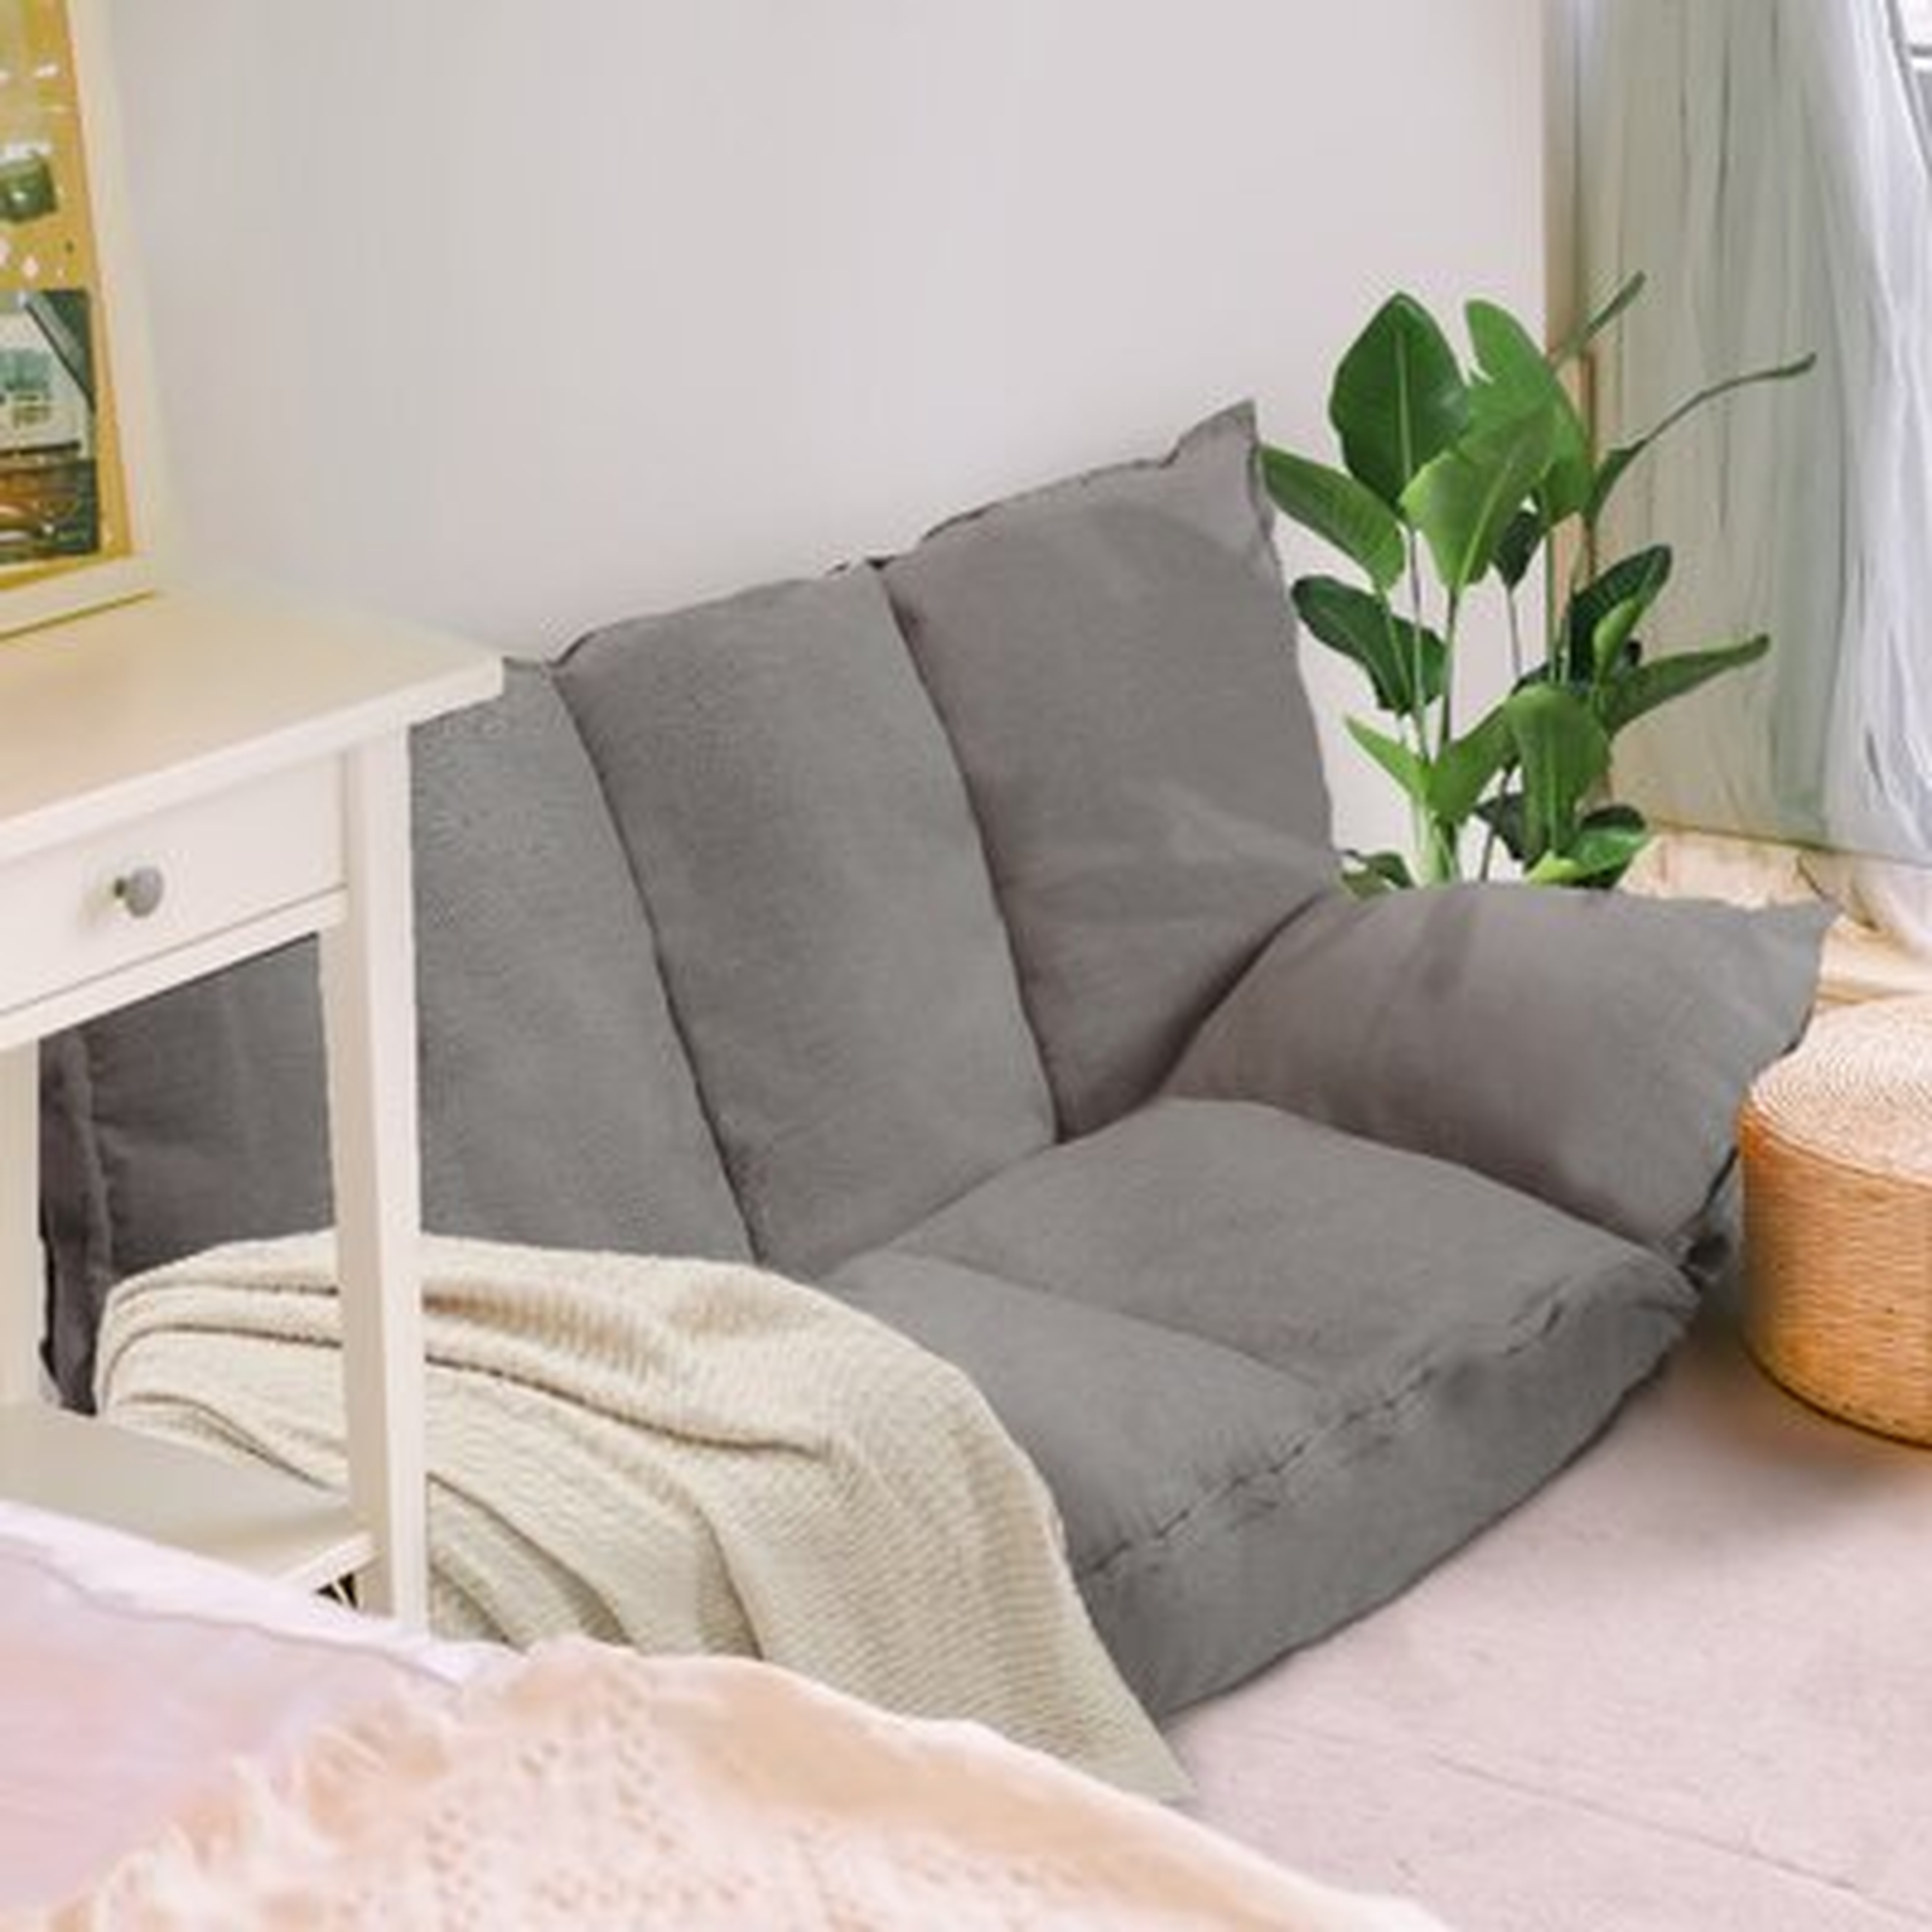 Adjustable Lazy Sofa Futon Bed Floor Couch - Wayfair